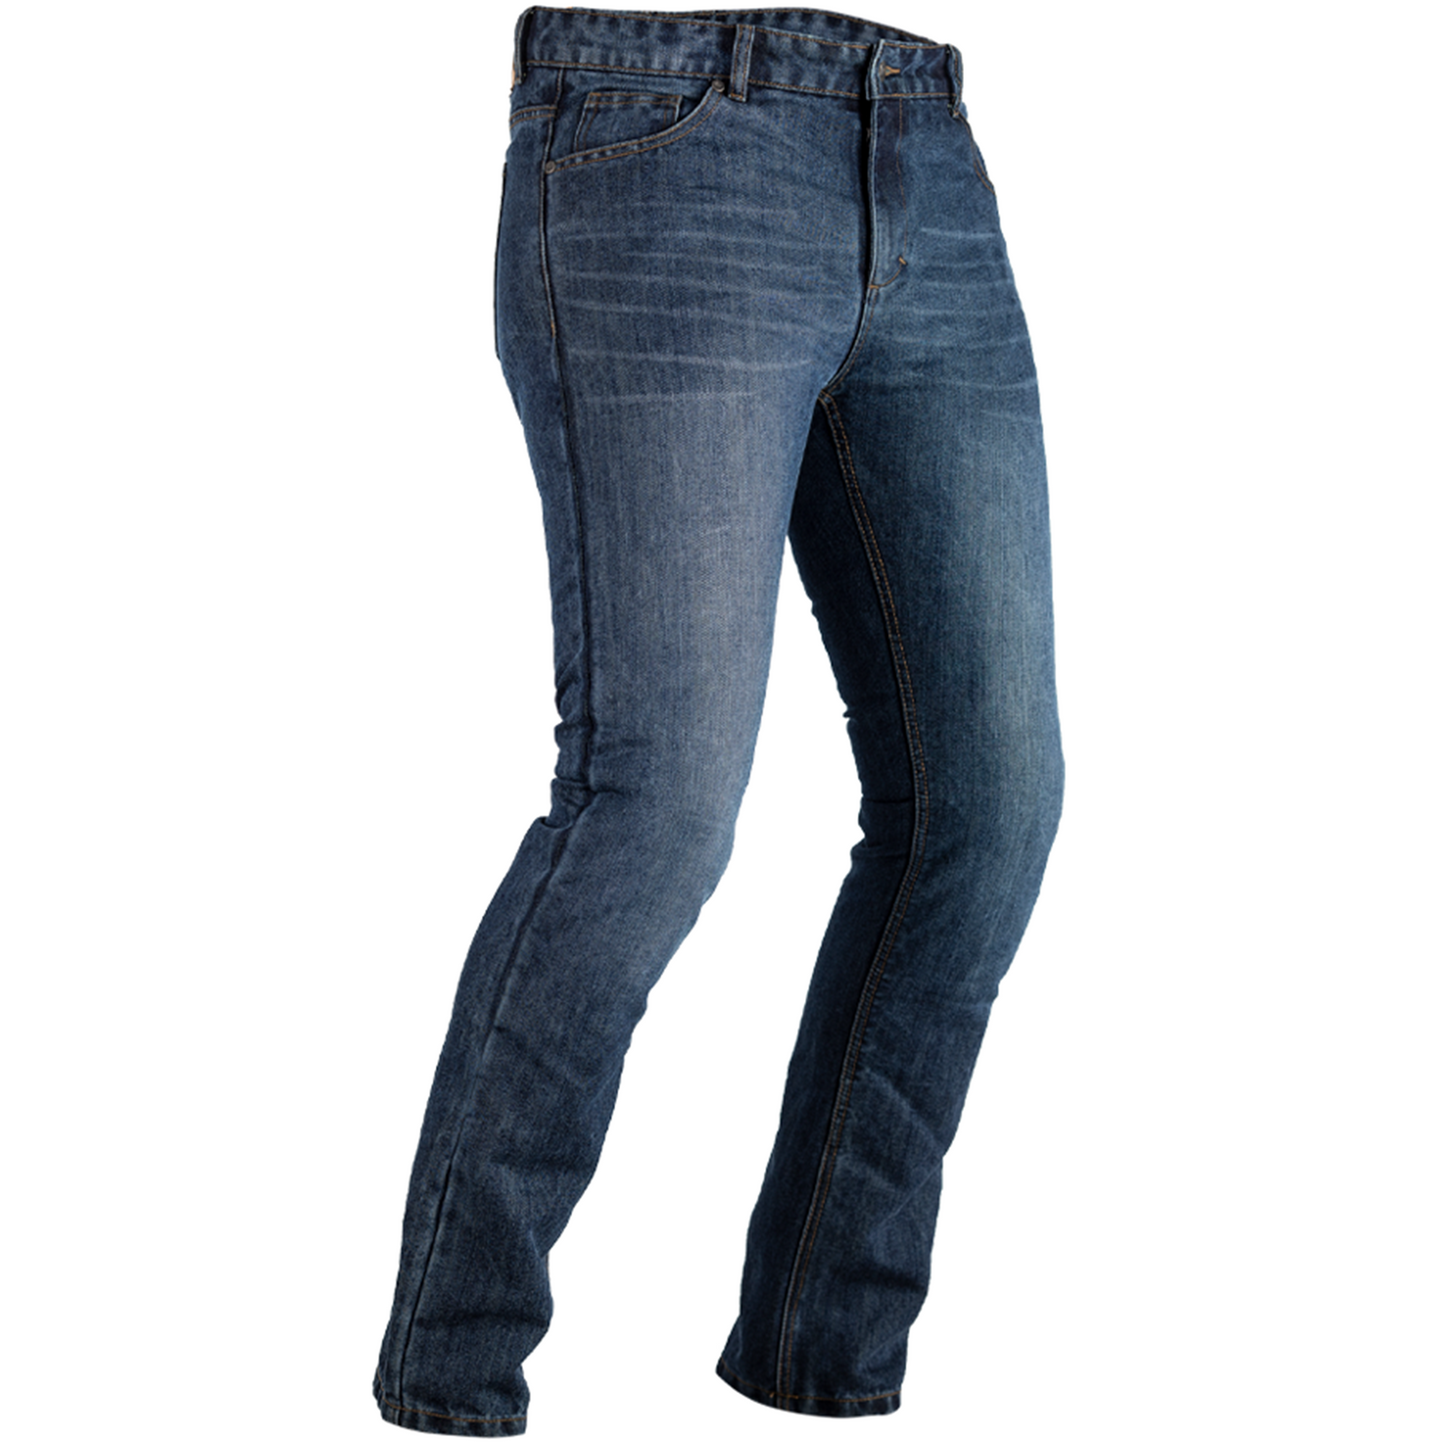 RST Single Layer Reinforced CE Jeans - Industrial Blue - Long Leg